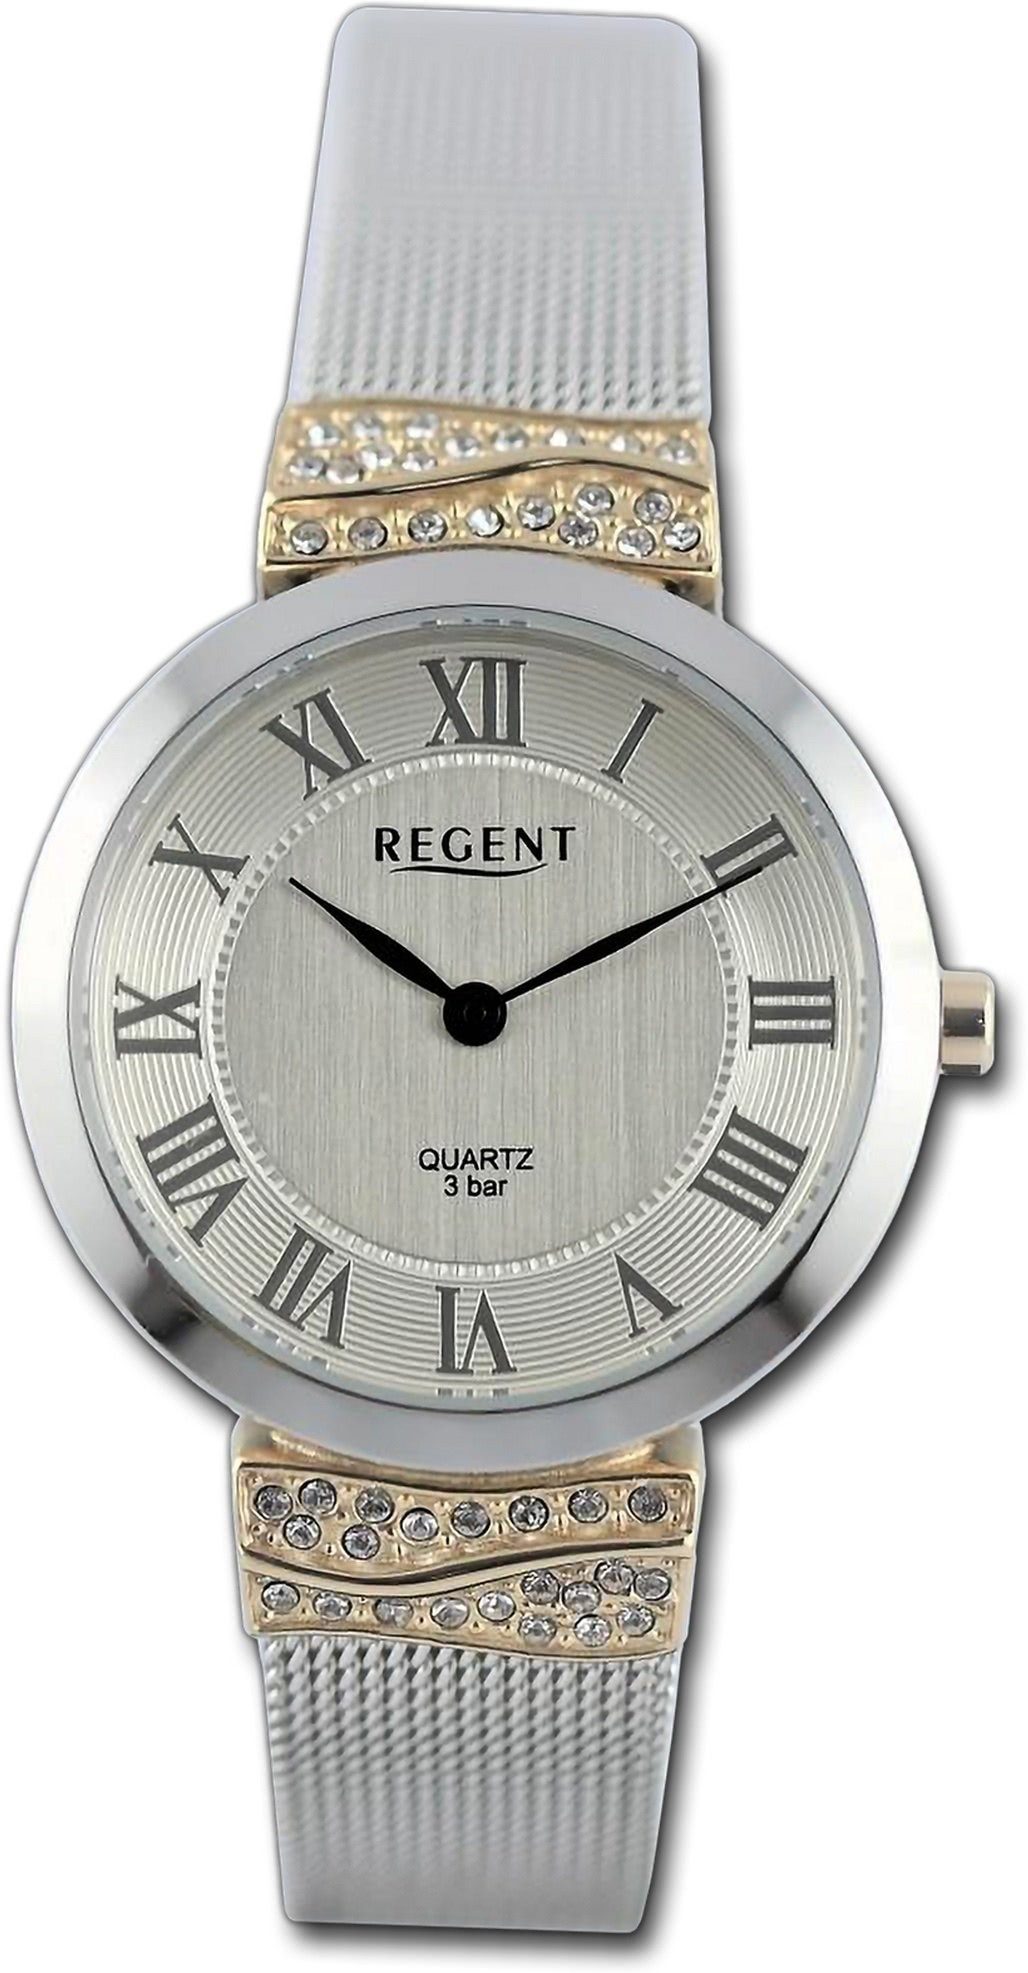 Metallarmband Regent groß Armbanduhr gold, silber, (ca. rundes Gehäuse, Analog, Damen 30mm) Damenuhr Regent Quarzuhr